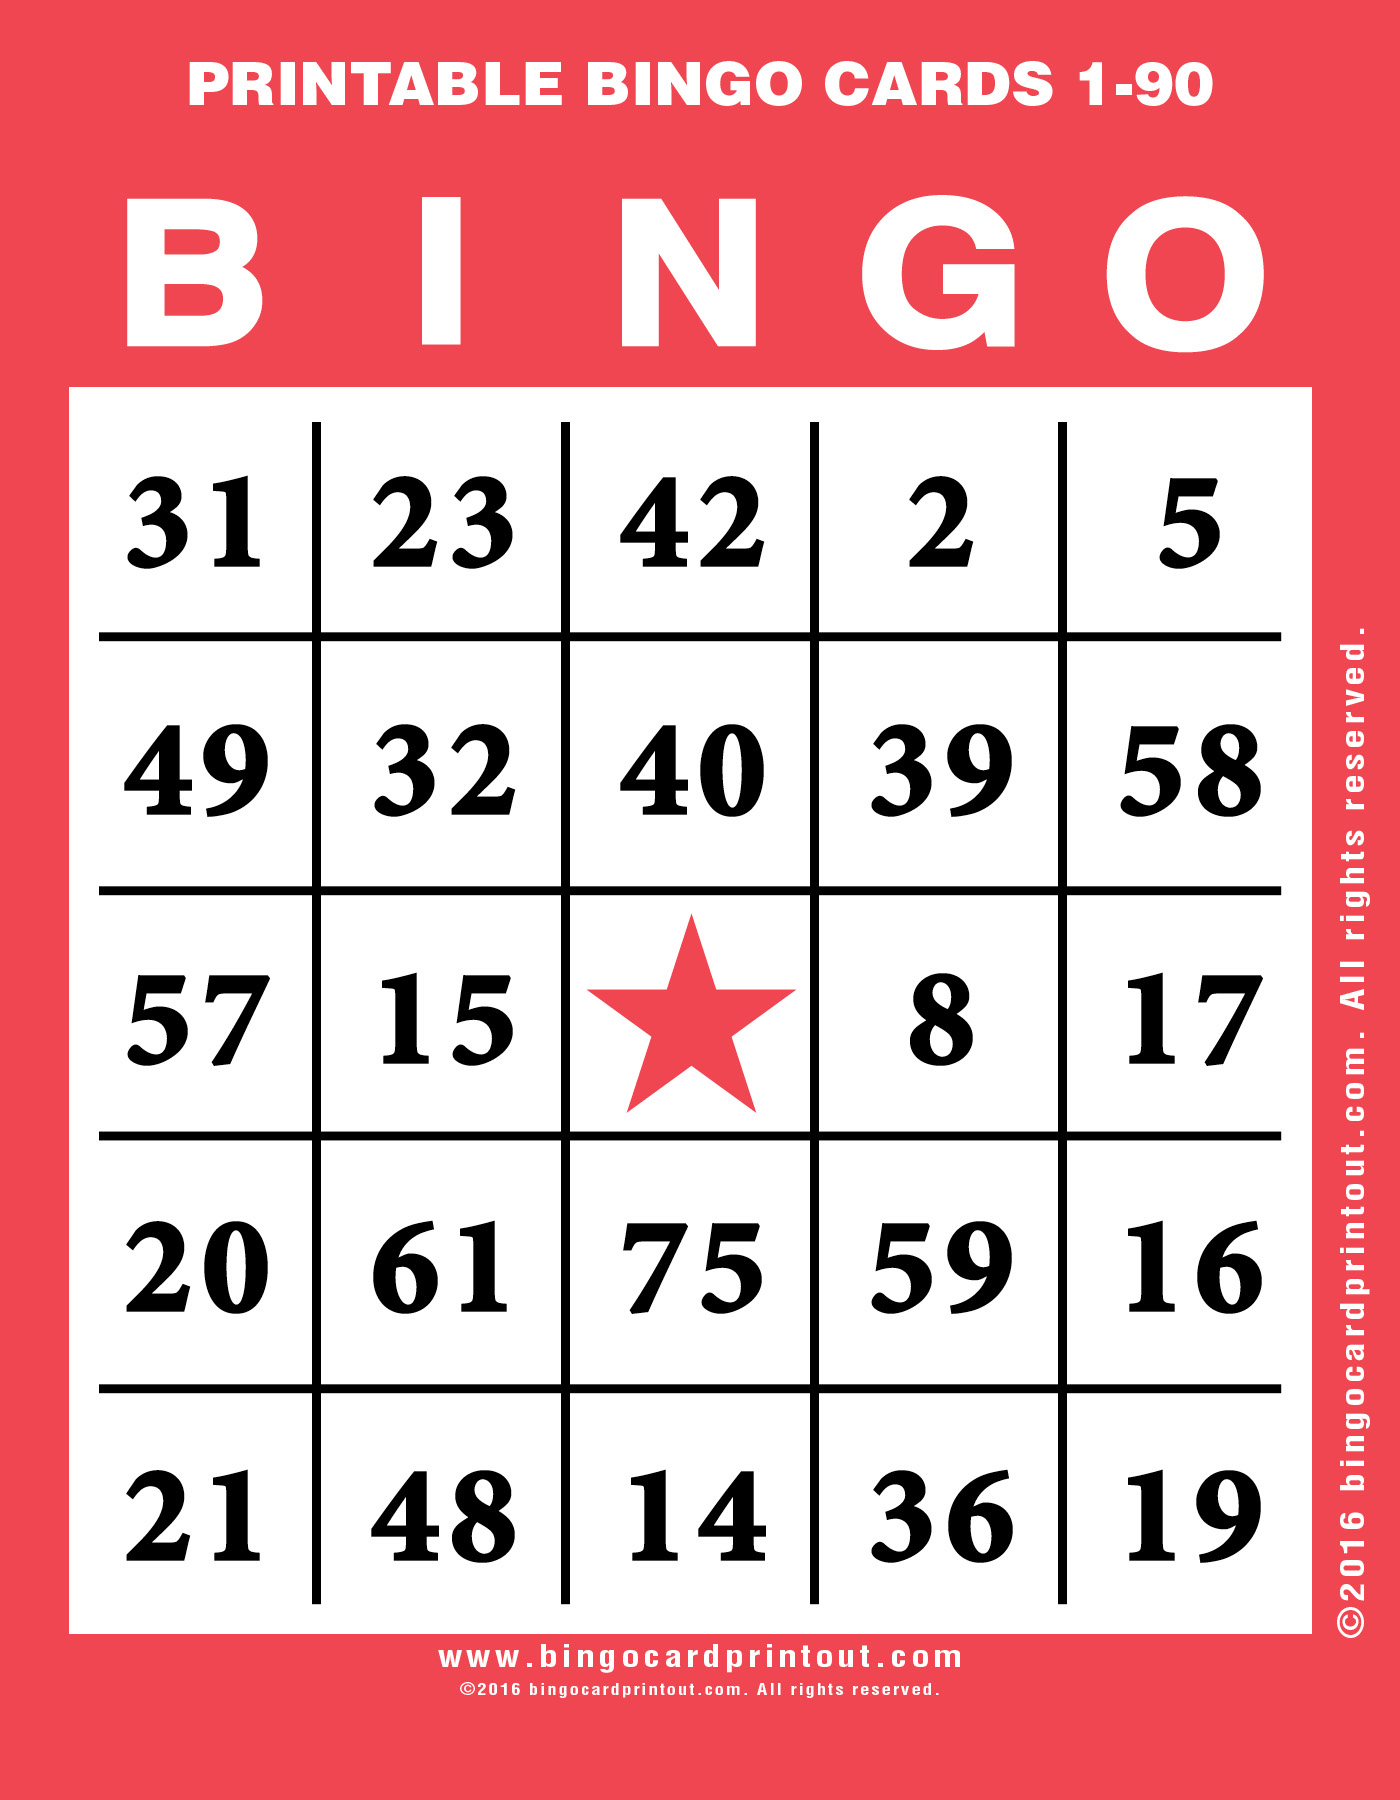 roleta do bingo